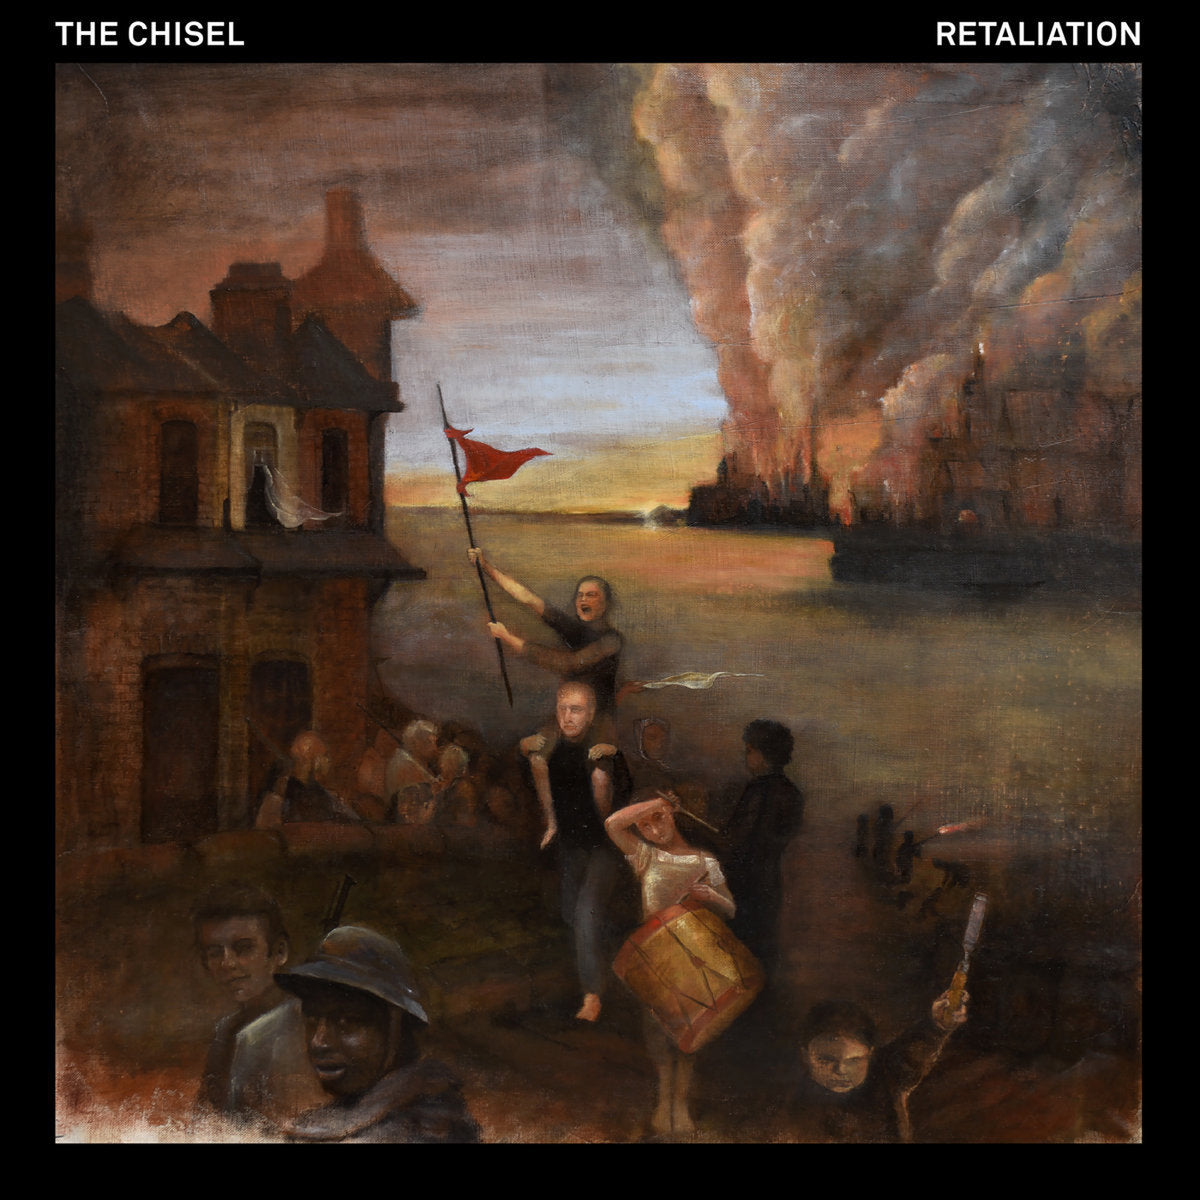 THE CHISEL "Retaliation" Tape